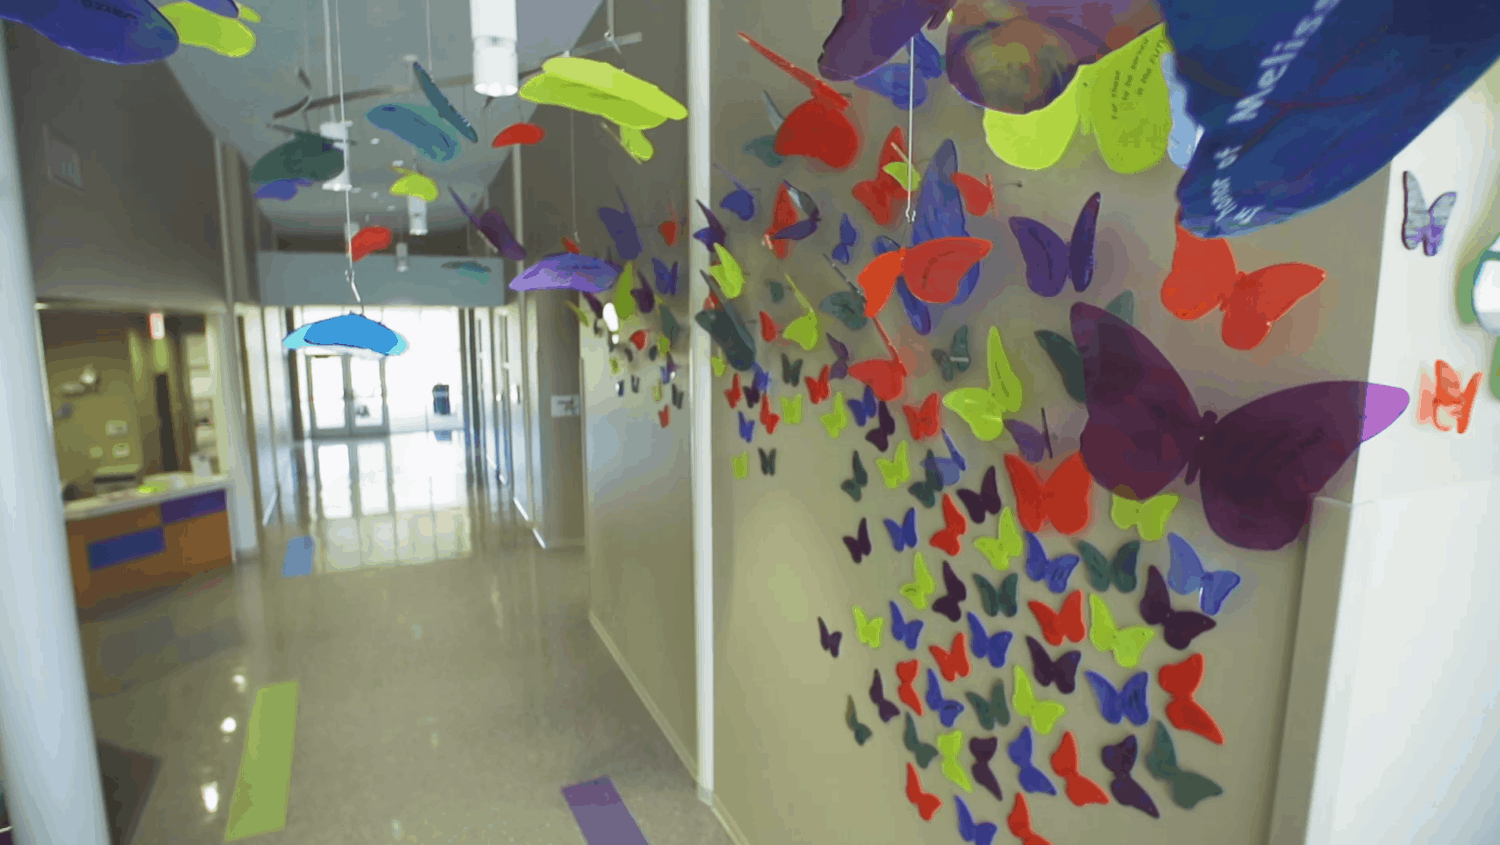 Plastic rainbow butterflies decorate the school hallway